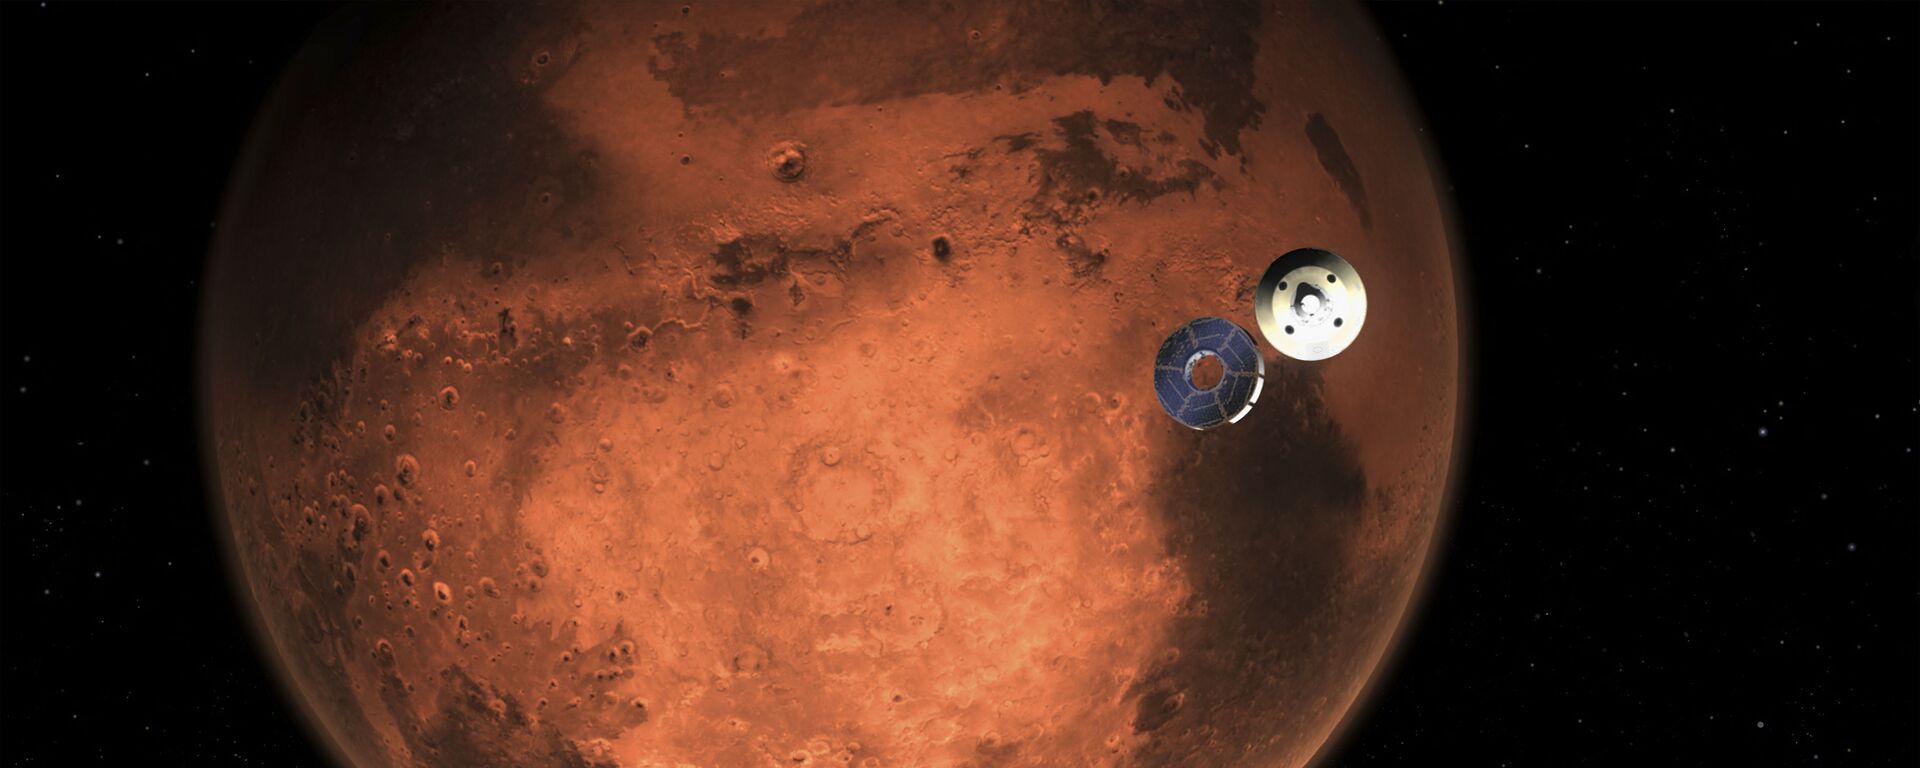 Вид на Марс, фото из архива - Sputnik Azərbaycan, 1920, 27.06.2021